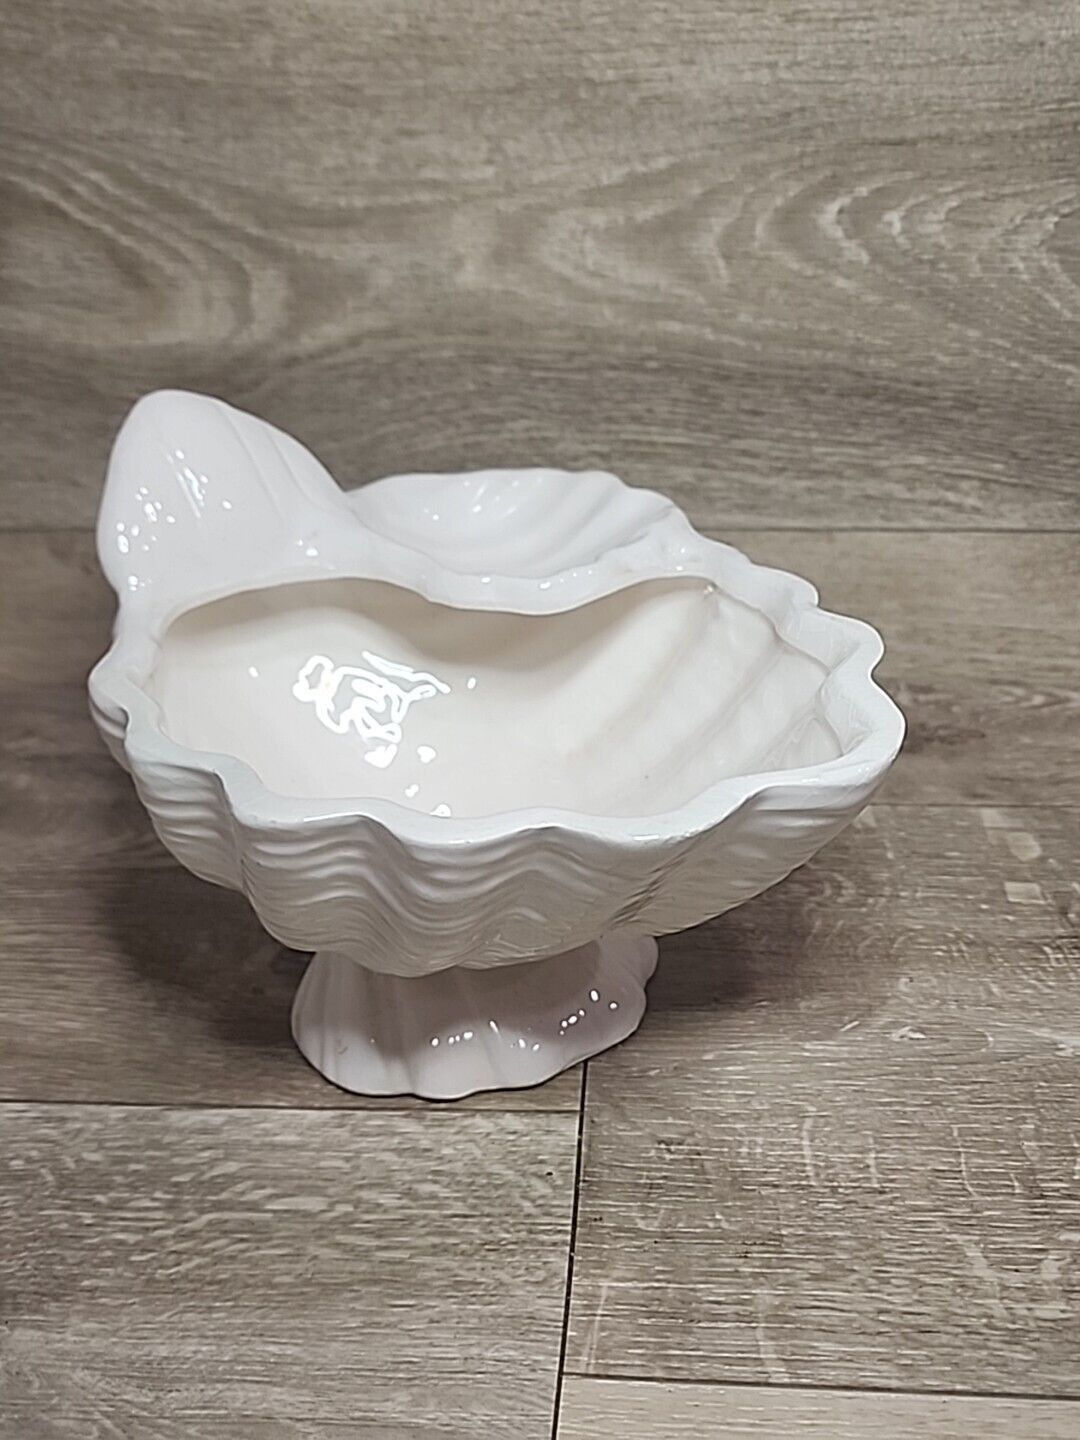 Ceramic Gloss White Seashell Bowl with a side small seashell shelf on Pedestal